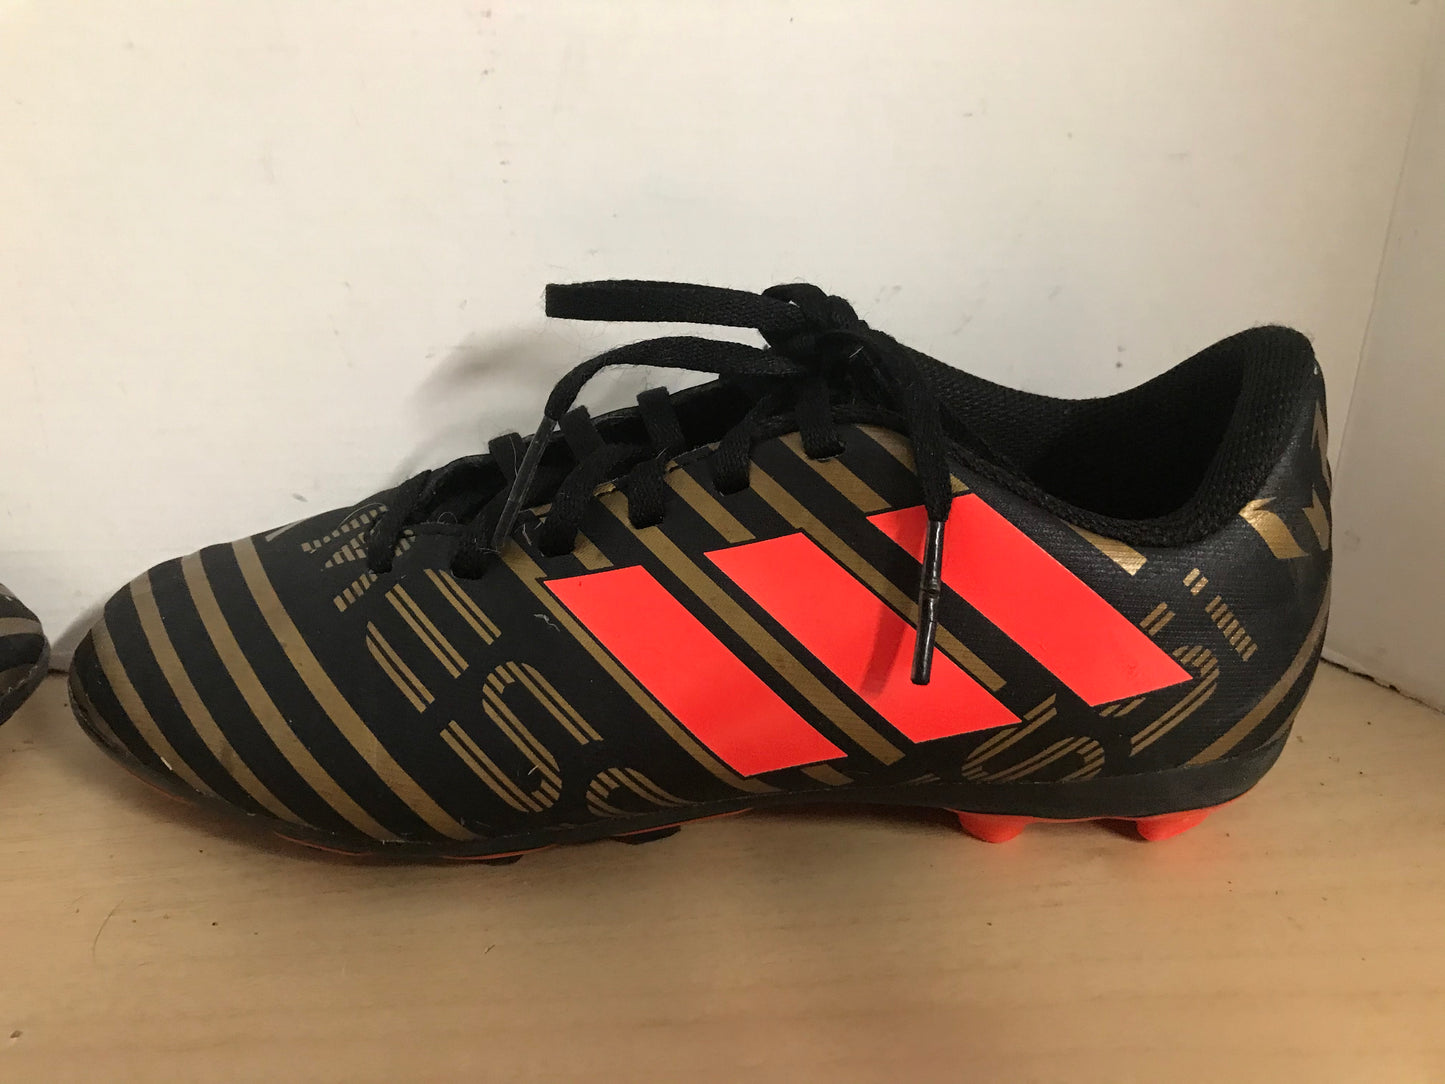 Soccer Shoes Cleats Child Size 4 Nike Messi Nemesis Black Coral Gold Excellent